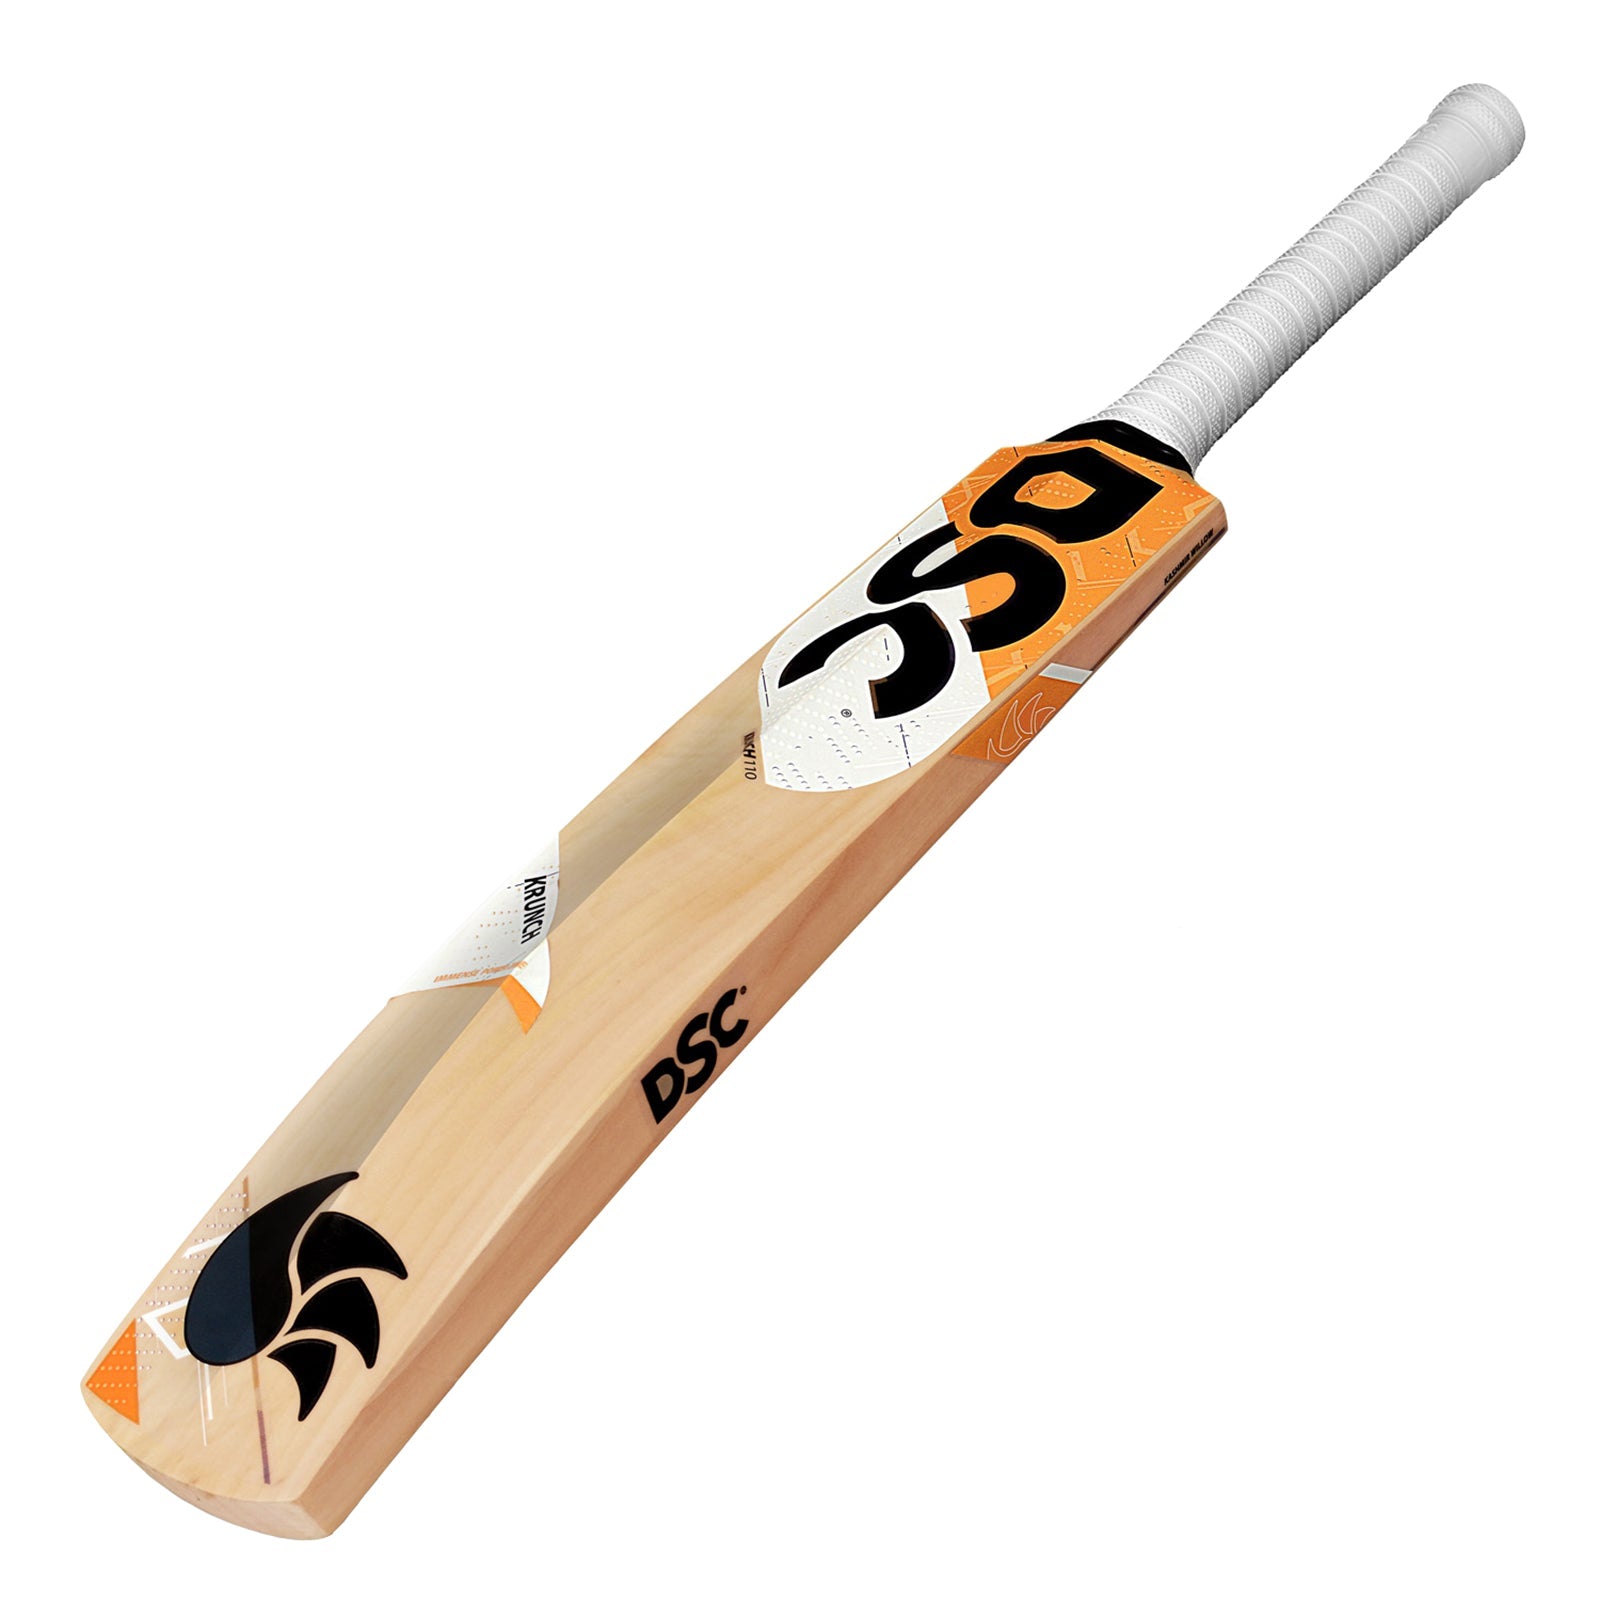 DSC Krunch 110 Kashmir Willow Cricket Bat - Harrow